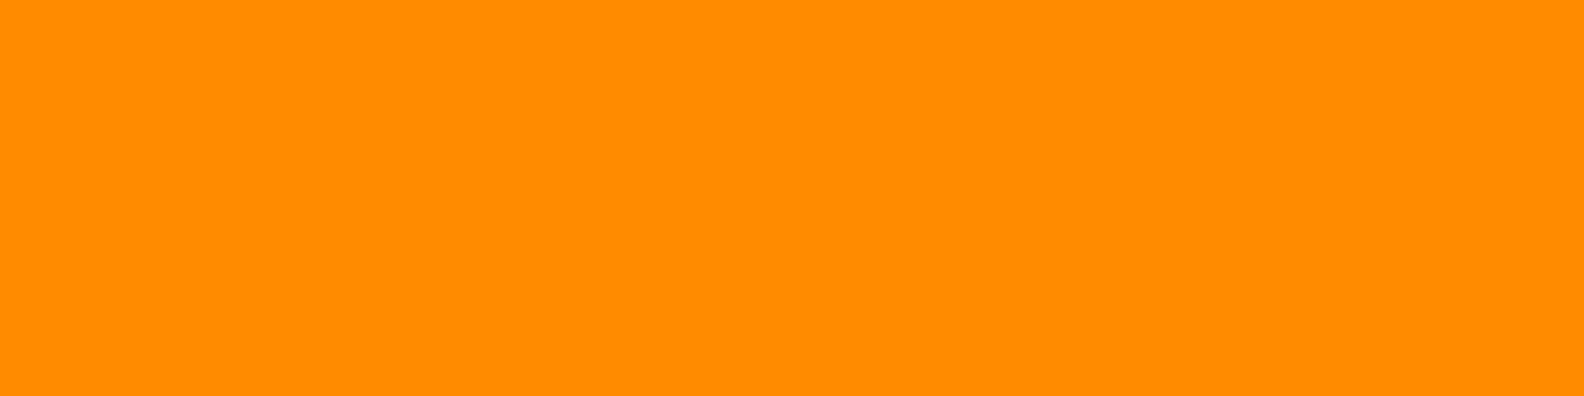 1584x396 Dark Orange Solid Color Background